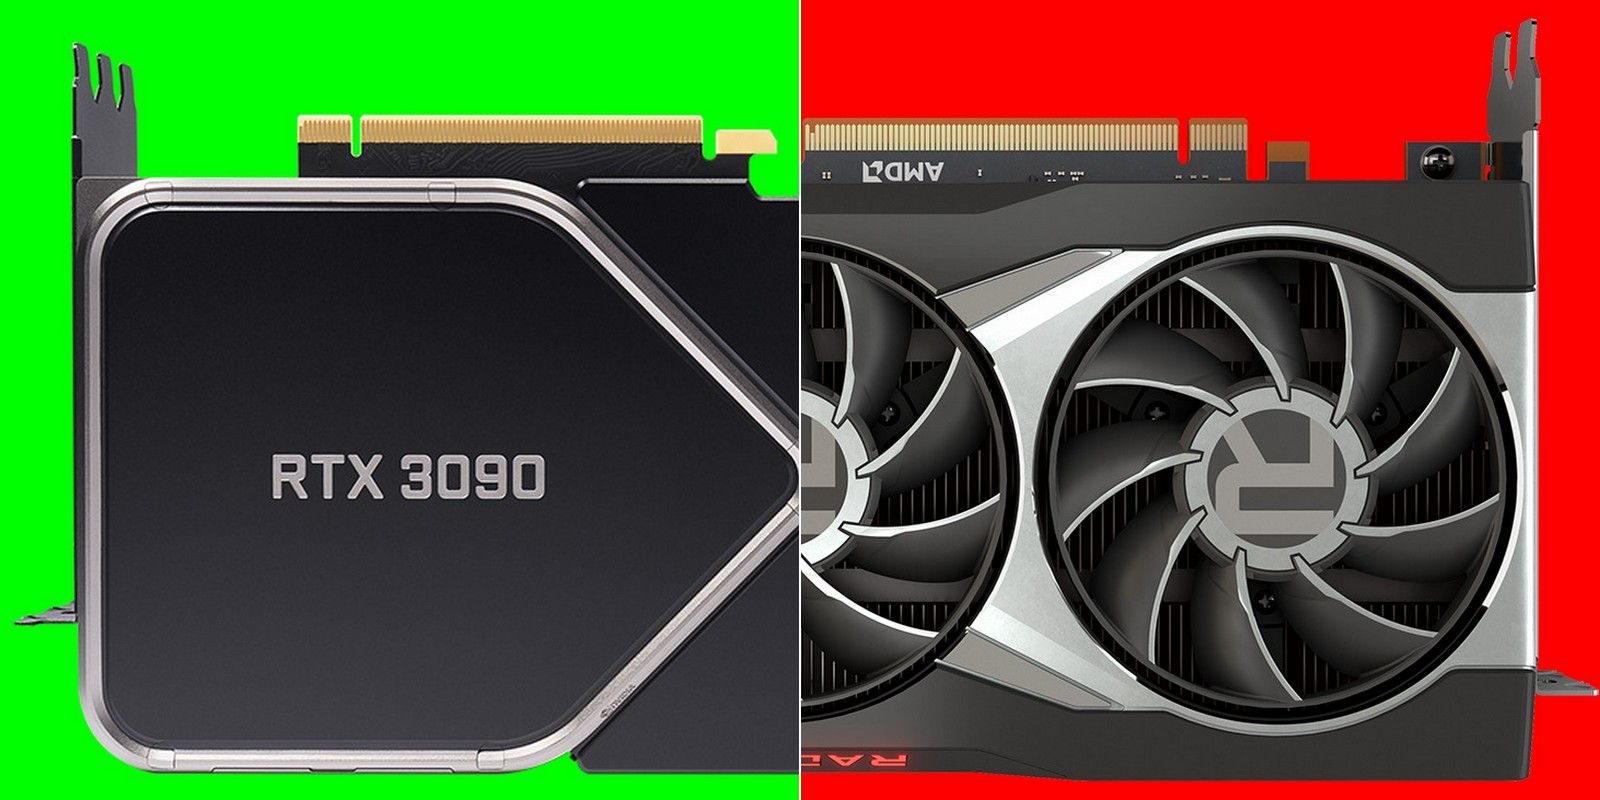 Nvidia GeForce RTX 3090 Ti Vs AMD Radeon RX 6900 XT: Which Is The Best Flagship GPU?